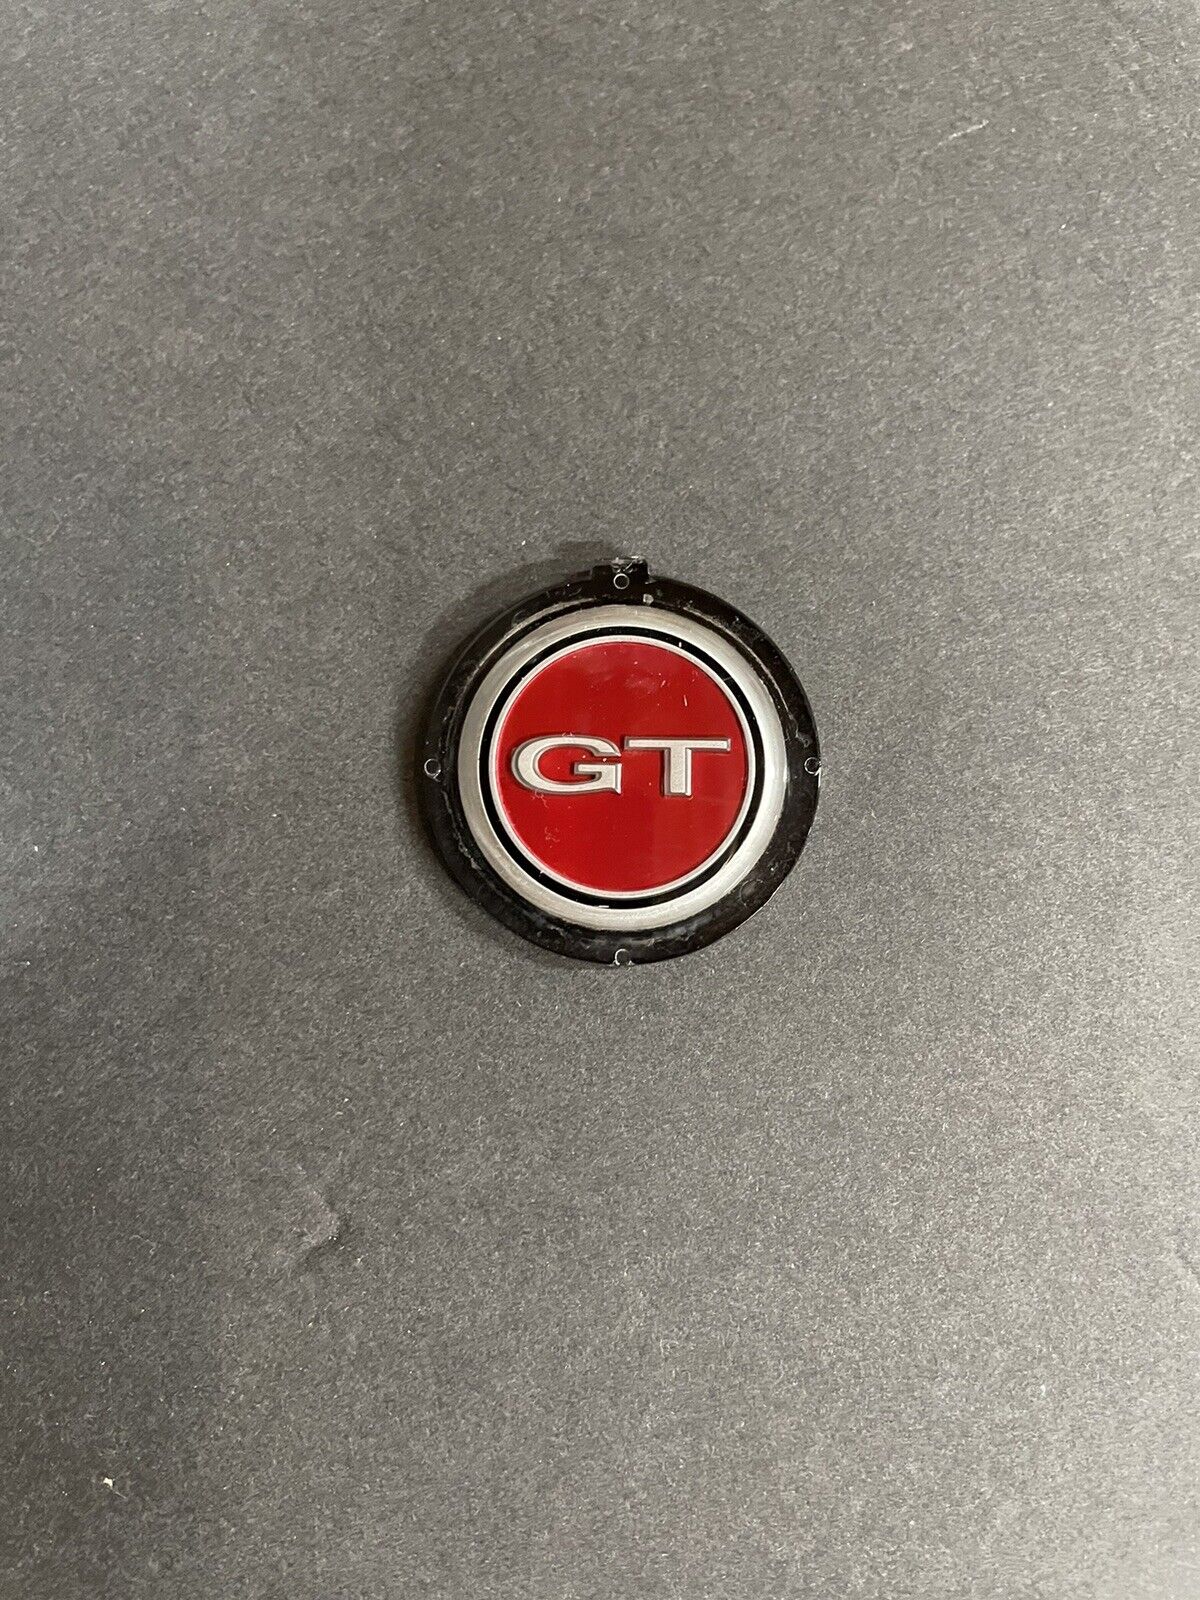 Vega GT steering GM Steering wheel horn button emblem 1971-1977. Good Condition.